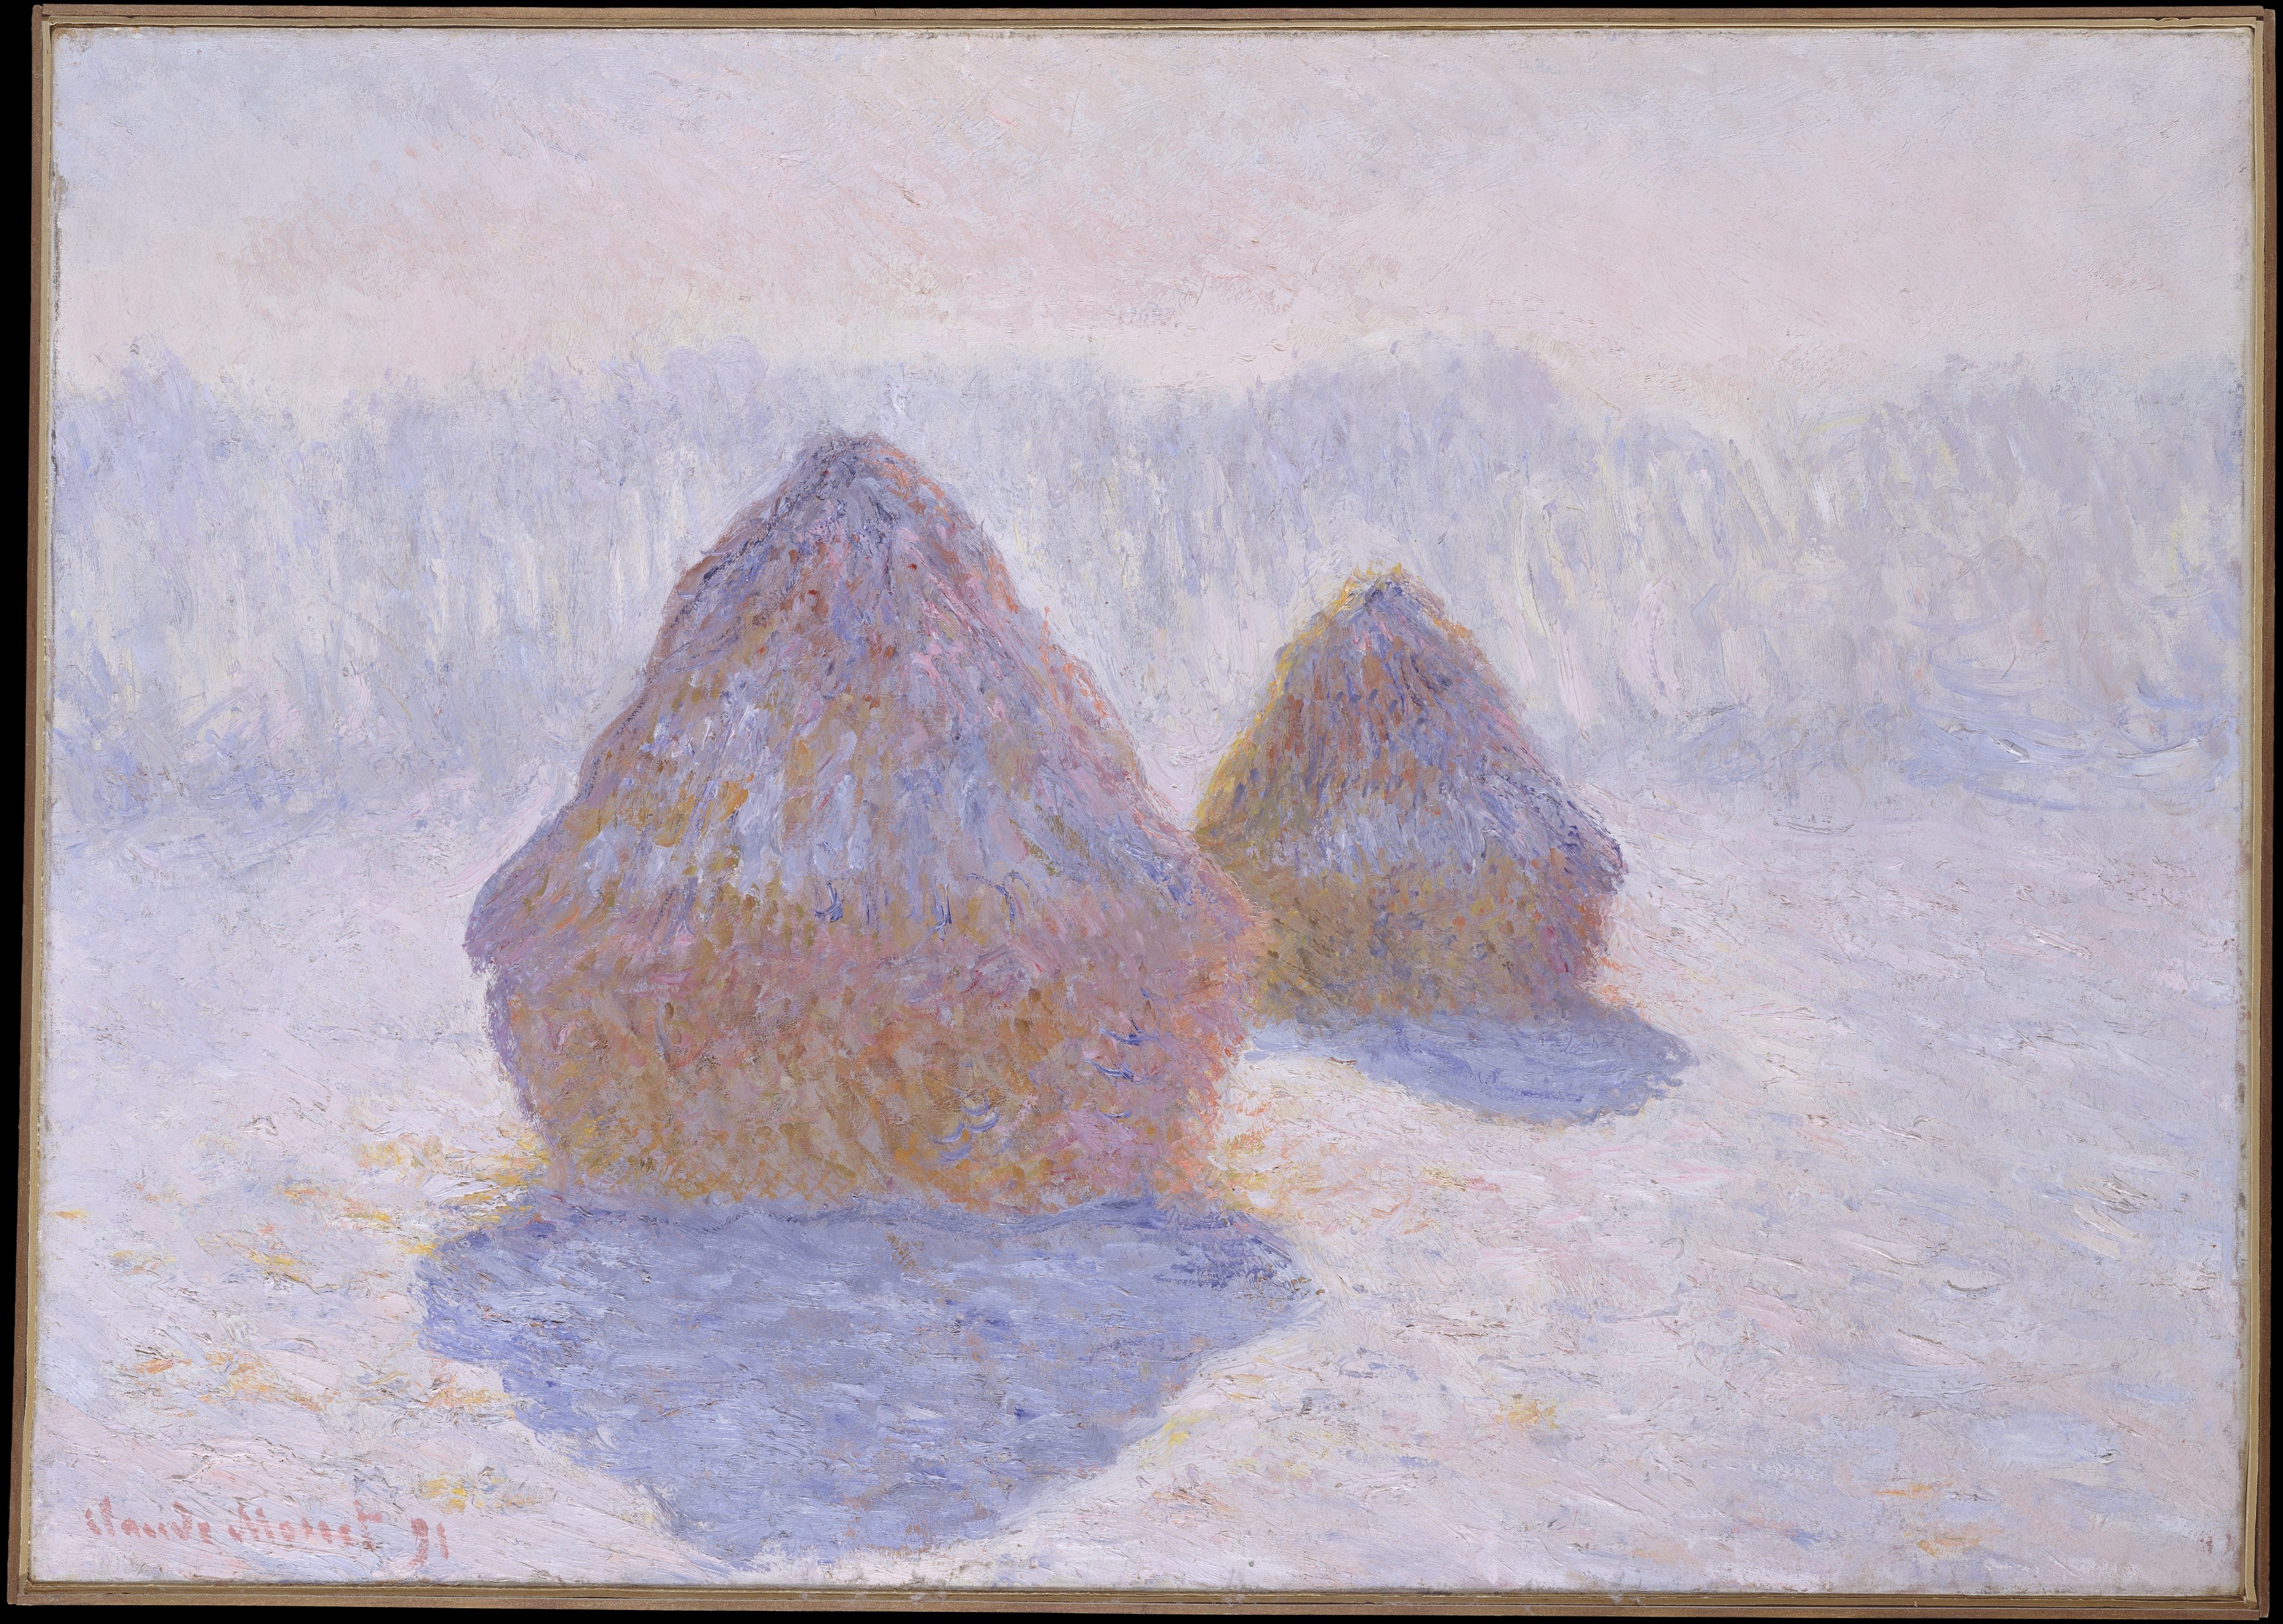 Haystacks (Effect of Snow and Sun) by Claude Monet - 1891 - 65.4 x 92.1 cm Metropolitan Museum of Art